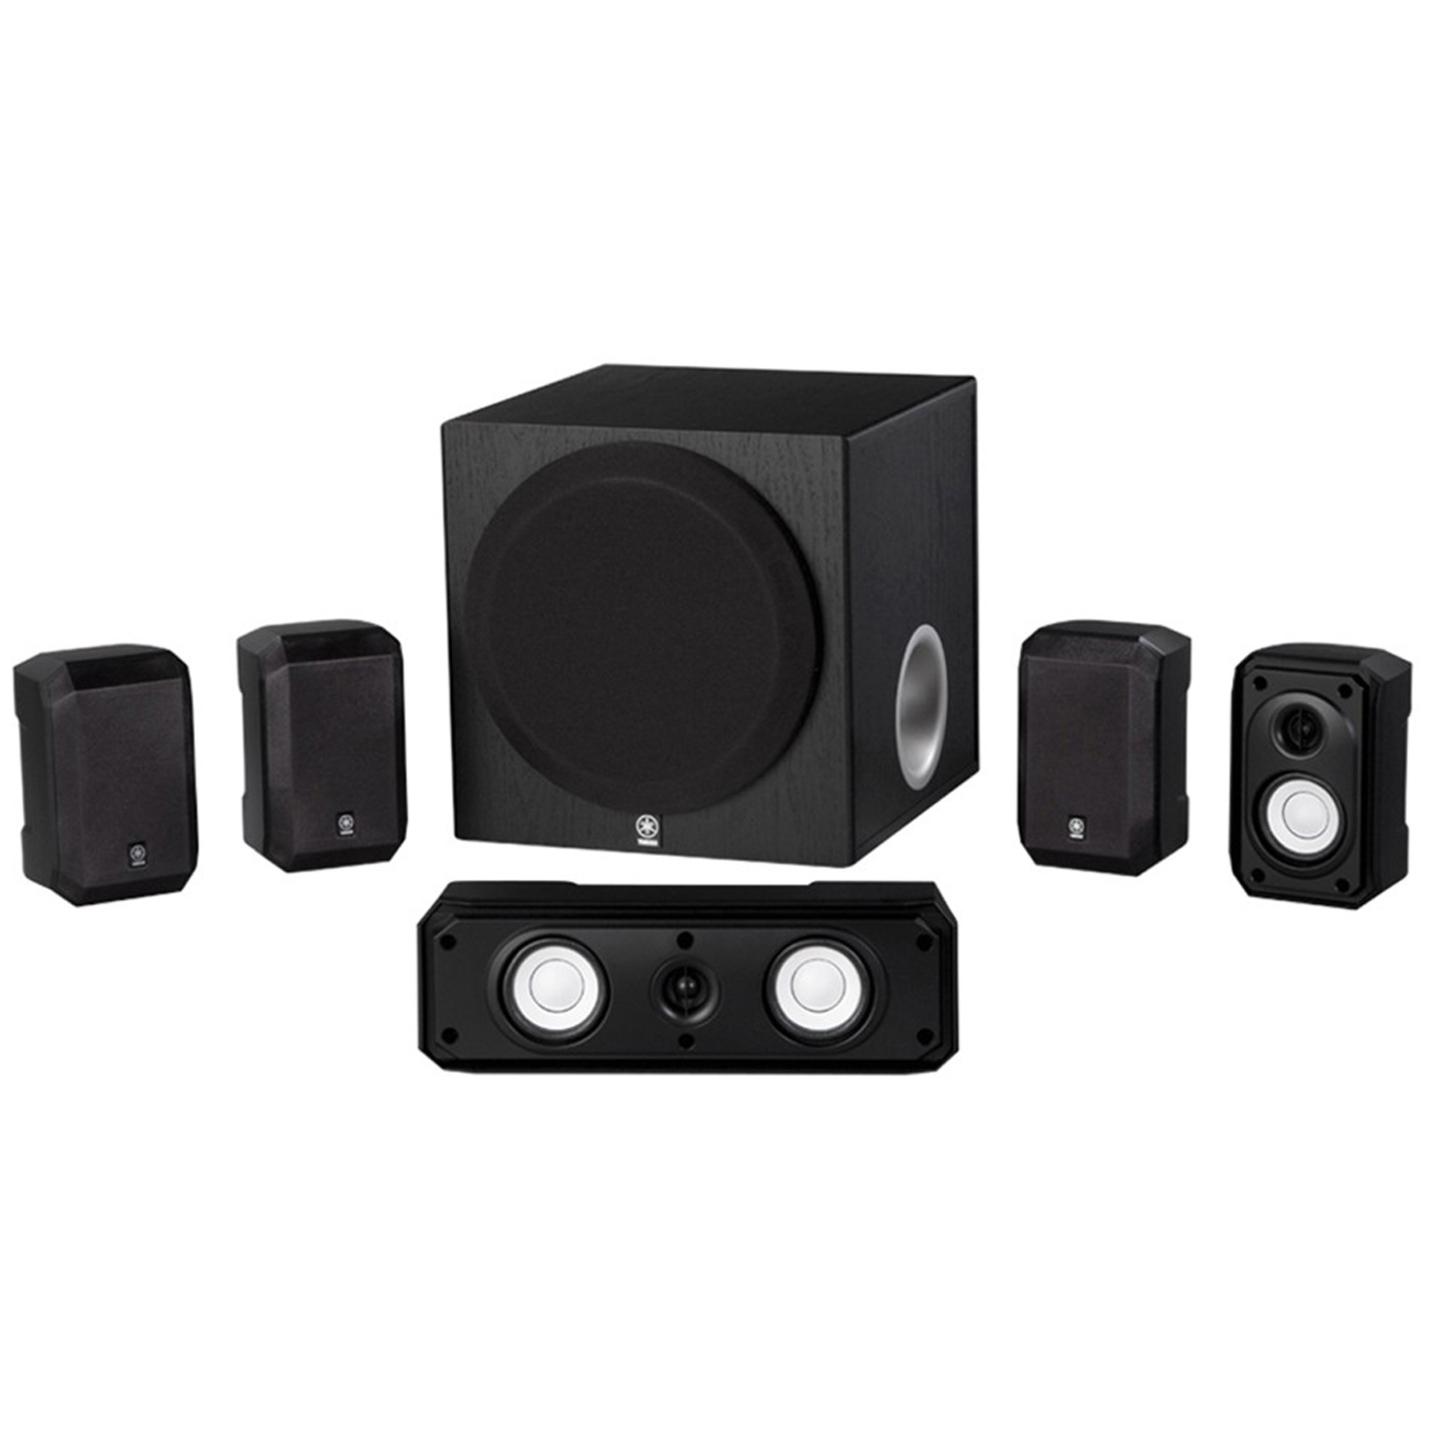 Yamaha NS-SP1800 5.1 Speaker System, 600 W RMS, Black - image 3 of 3